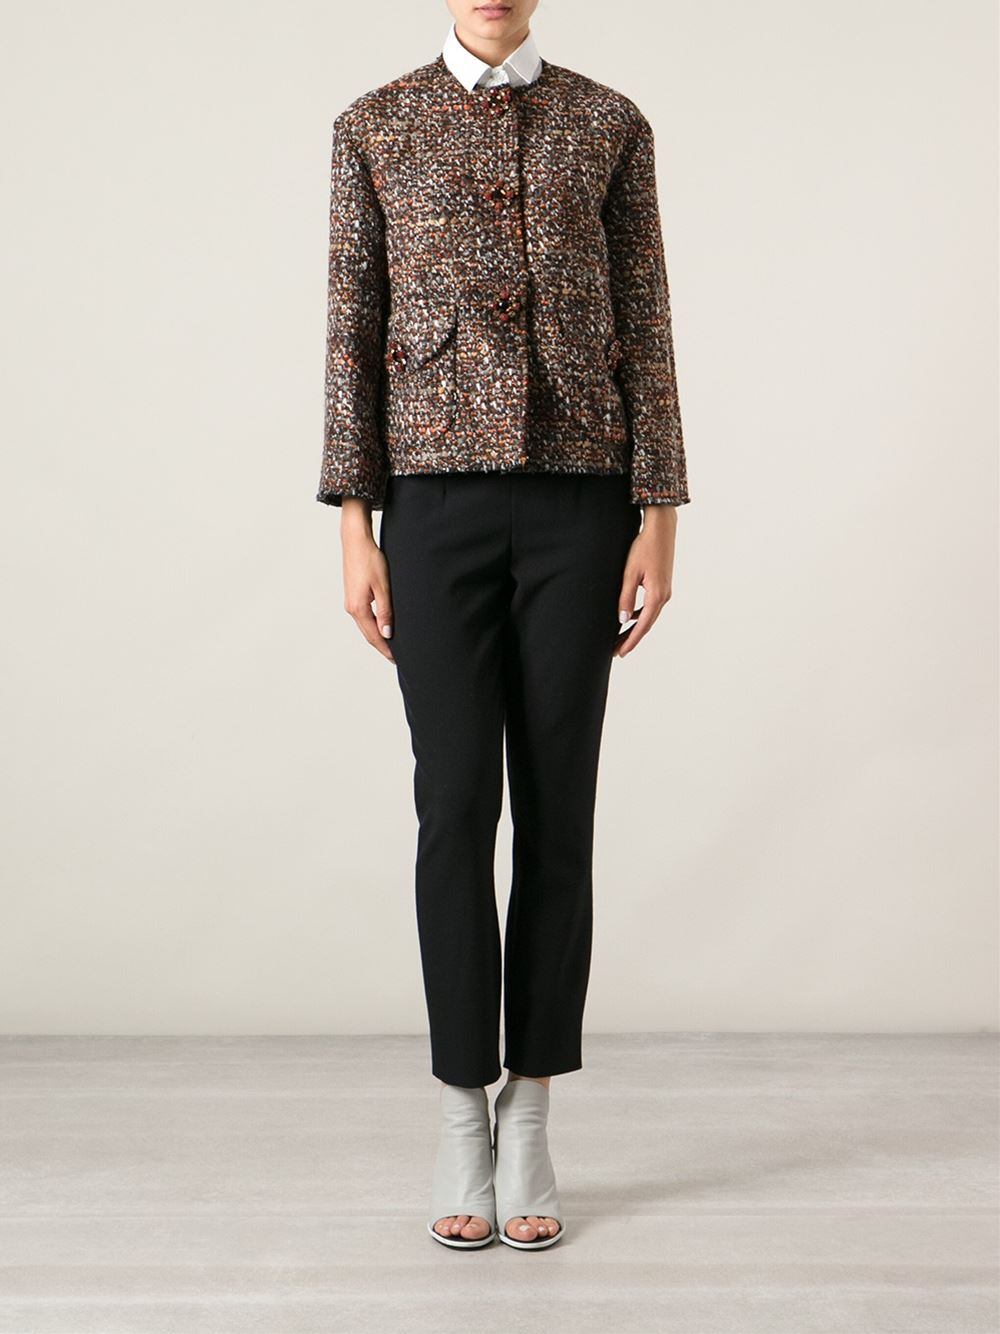 Lyst - Dolce & Gabbana Multi Bouclé Tweed Jacket in Brown